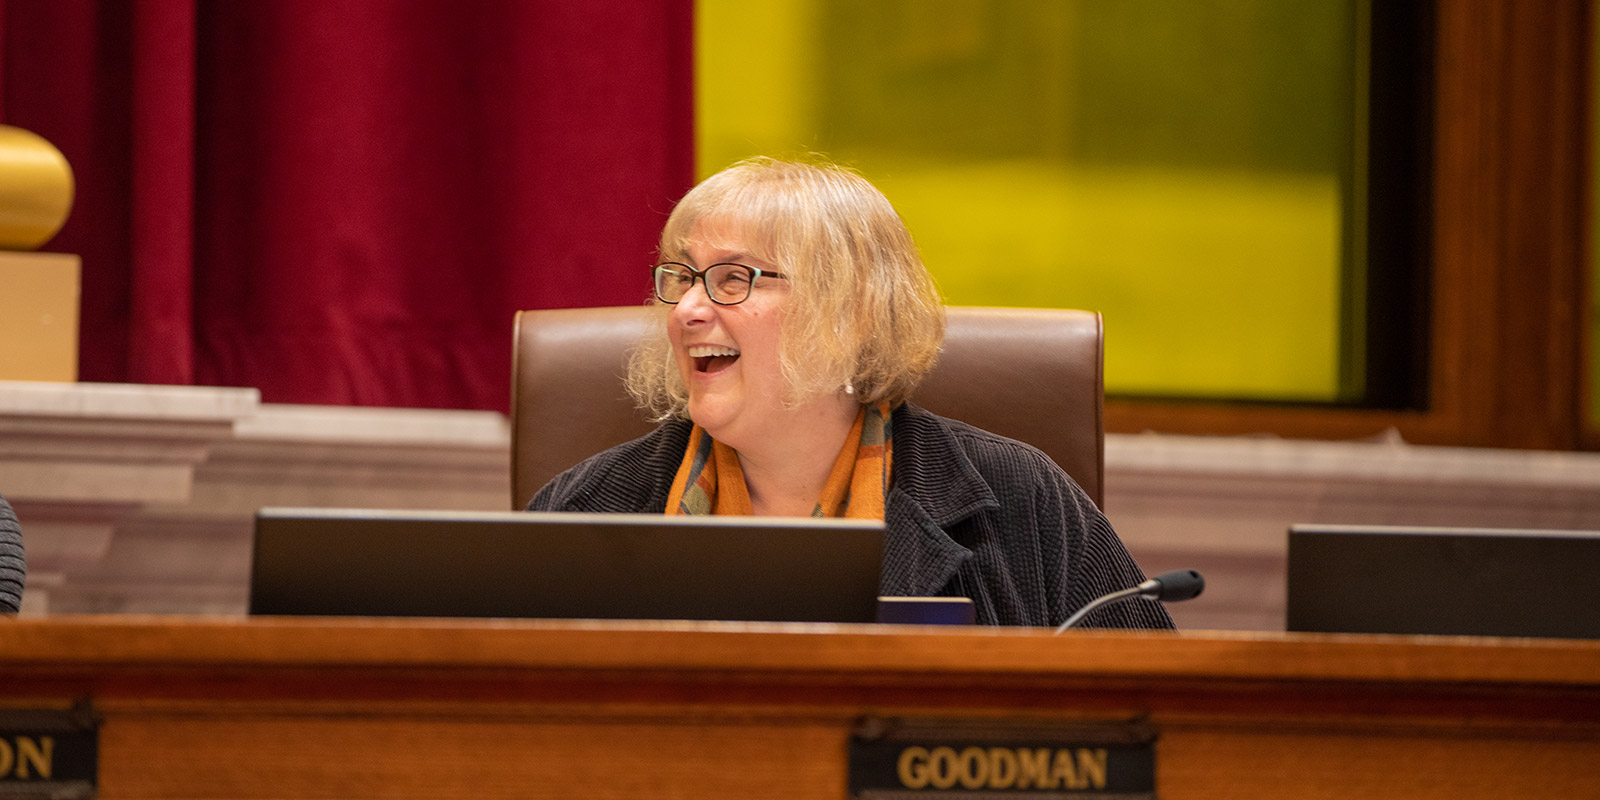 Council Member Lisa Goodman